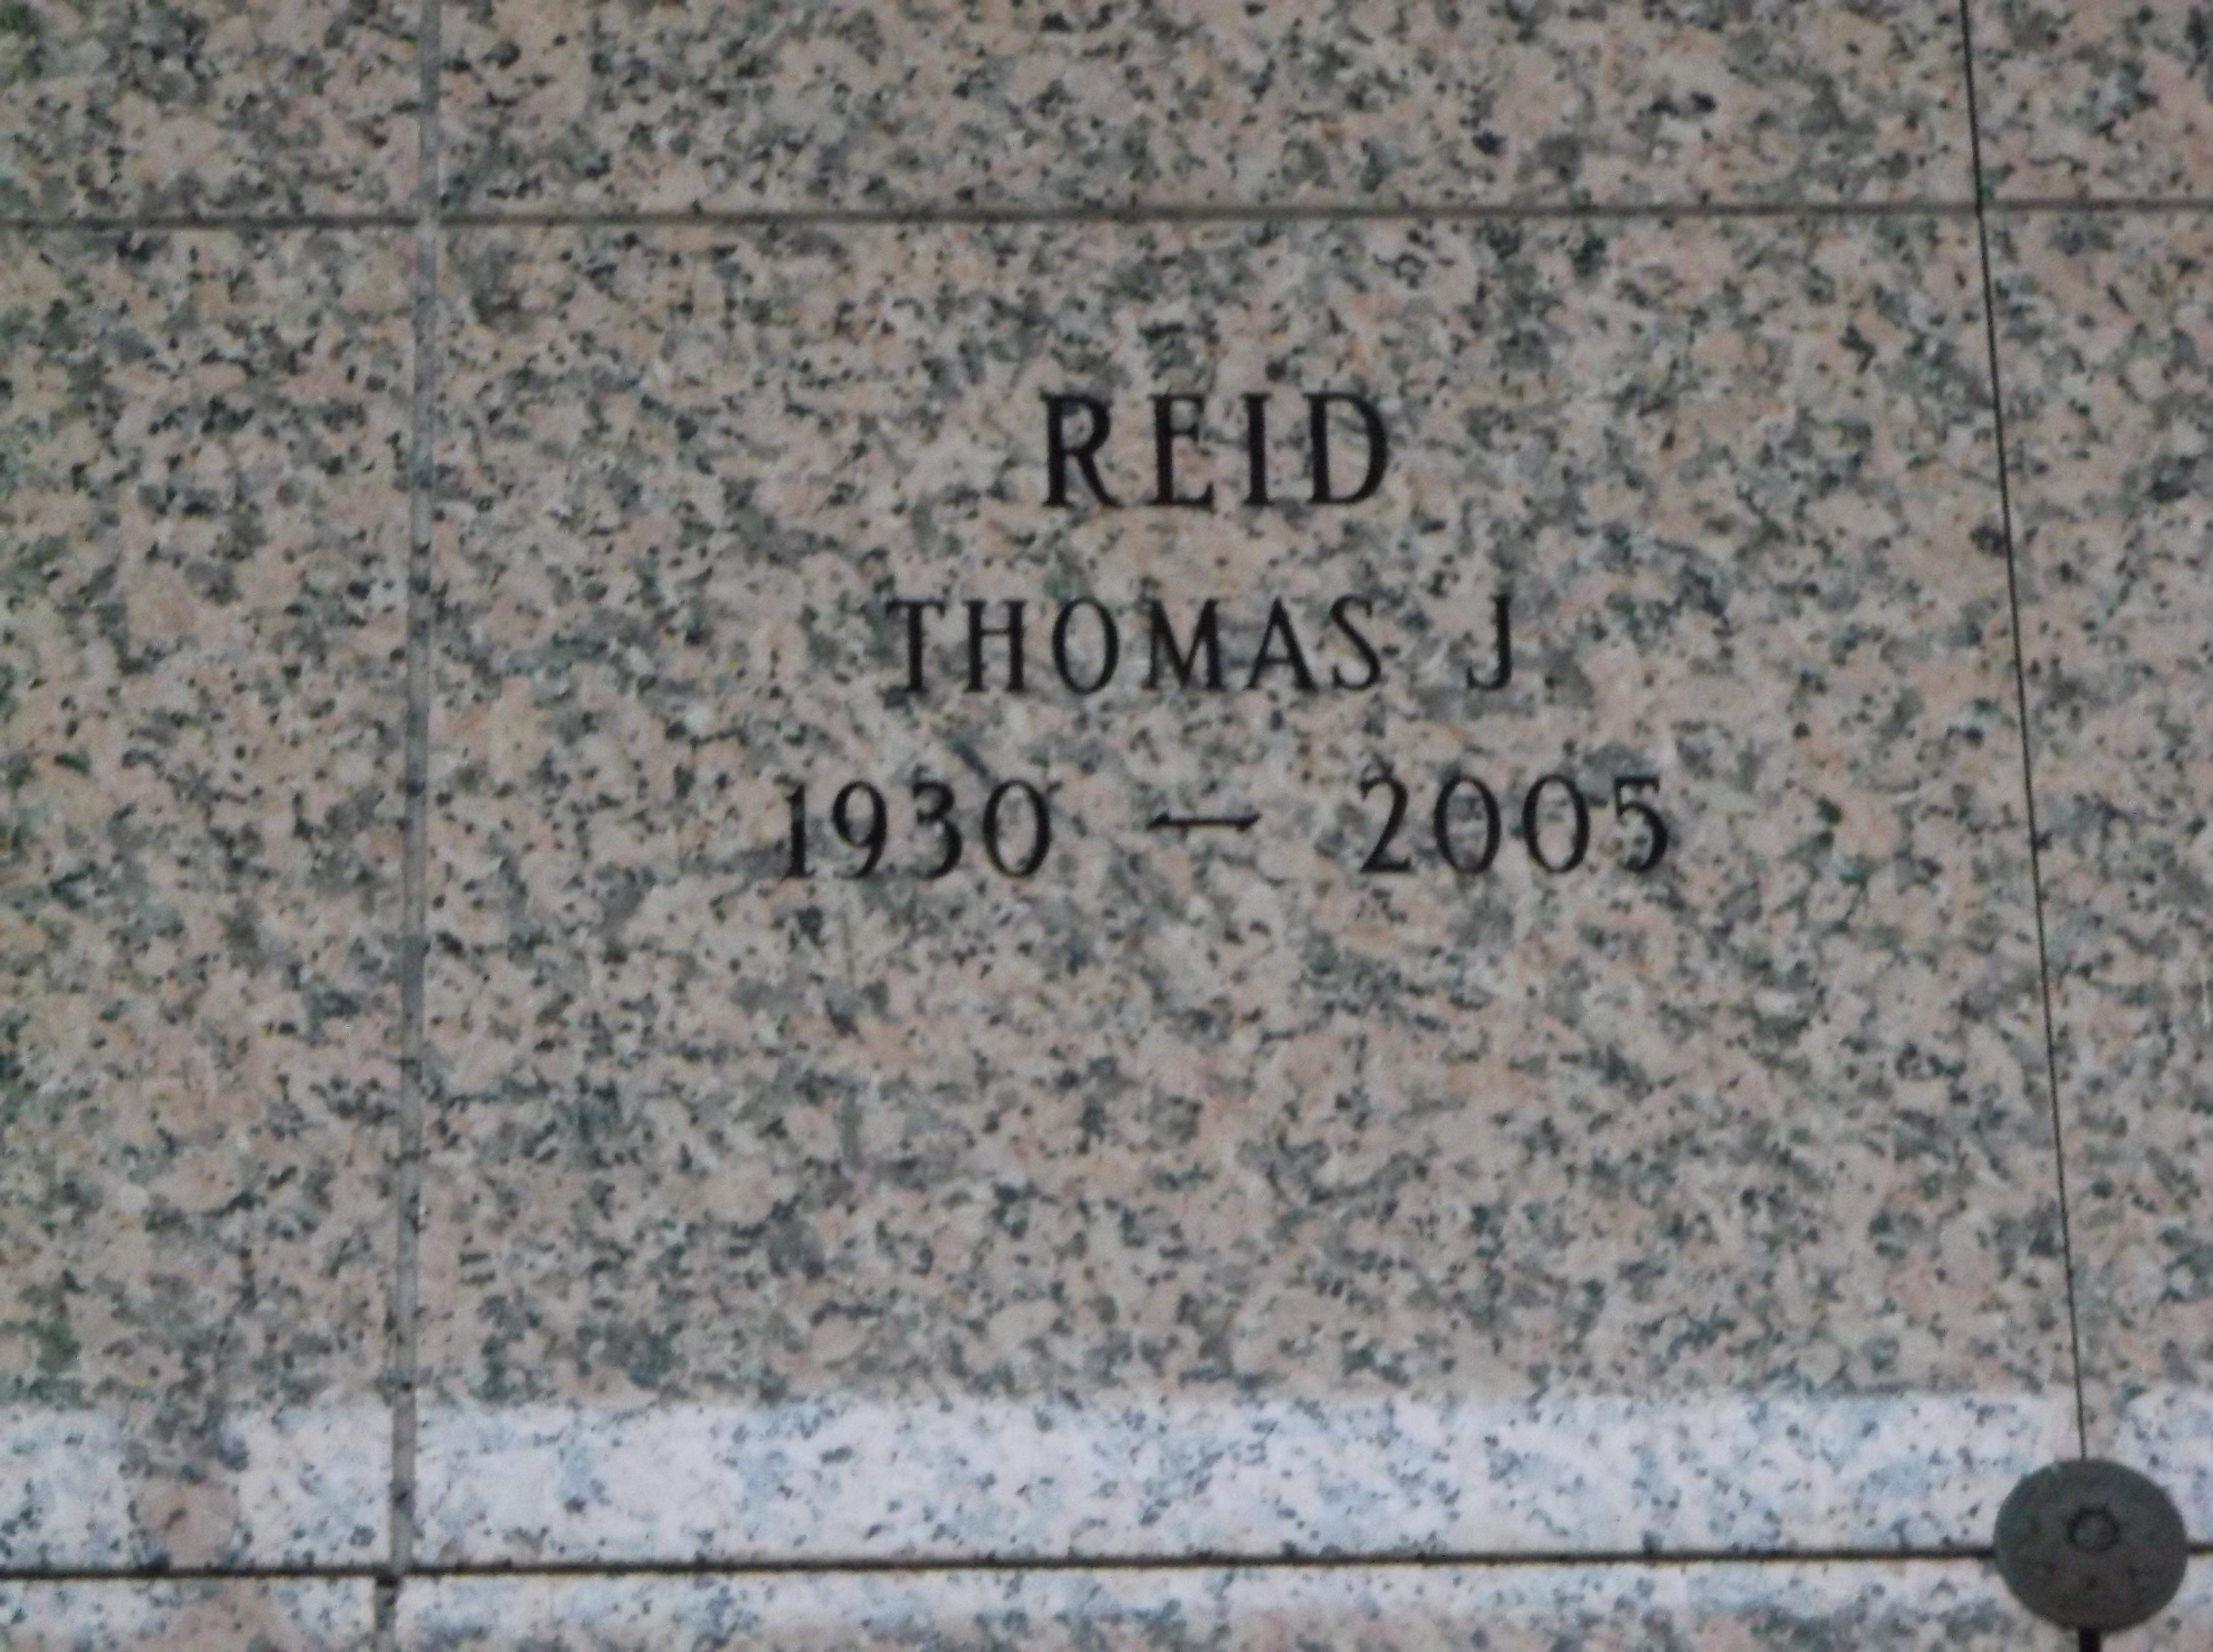 Thomas J Reid